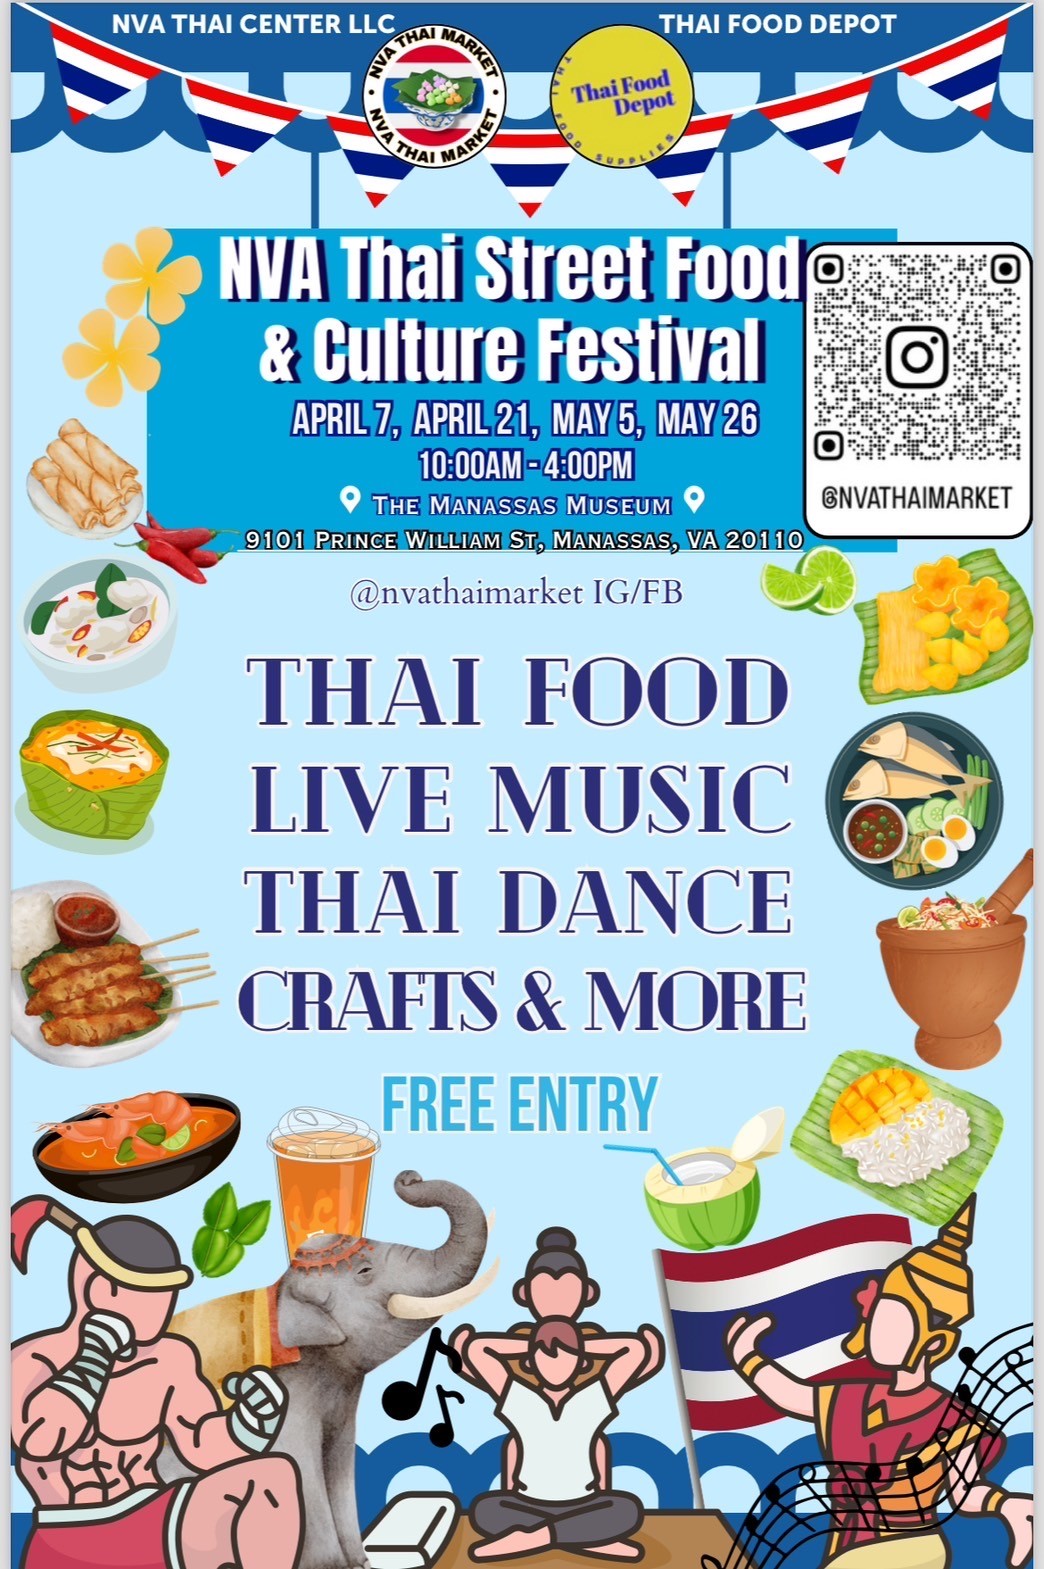 NVA Thai Street Food & Culture Festival